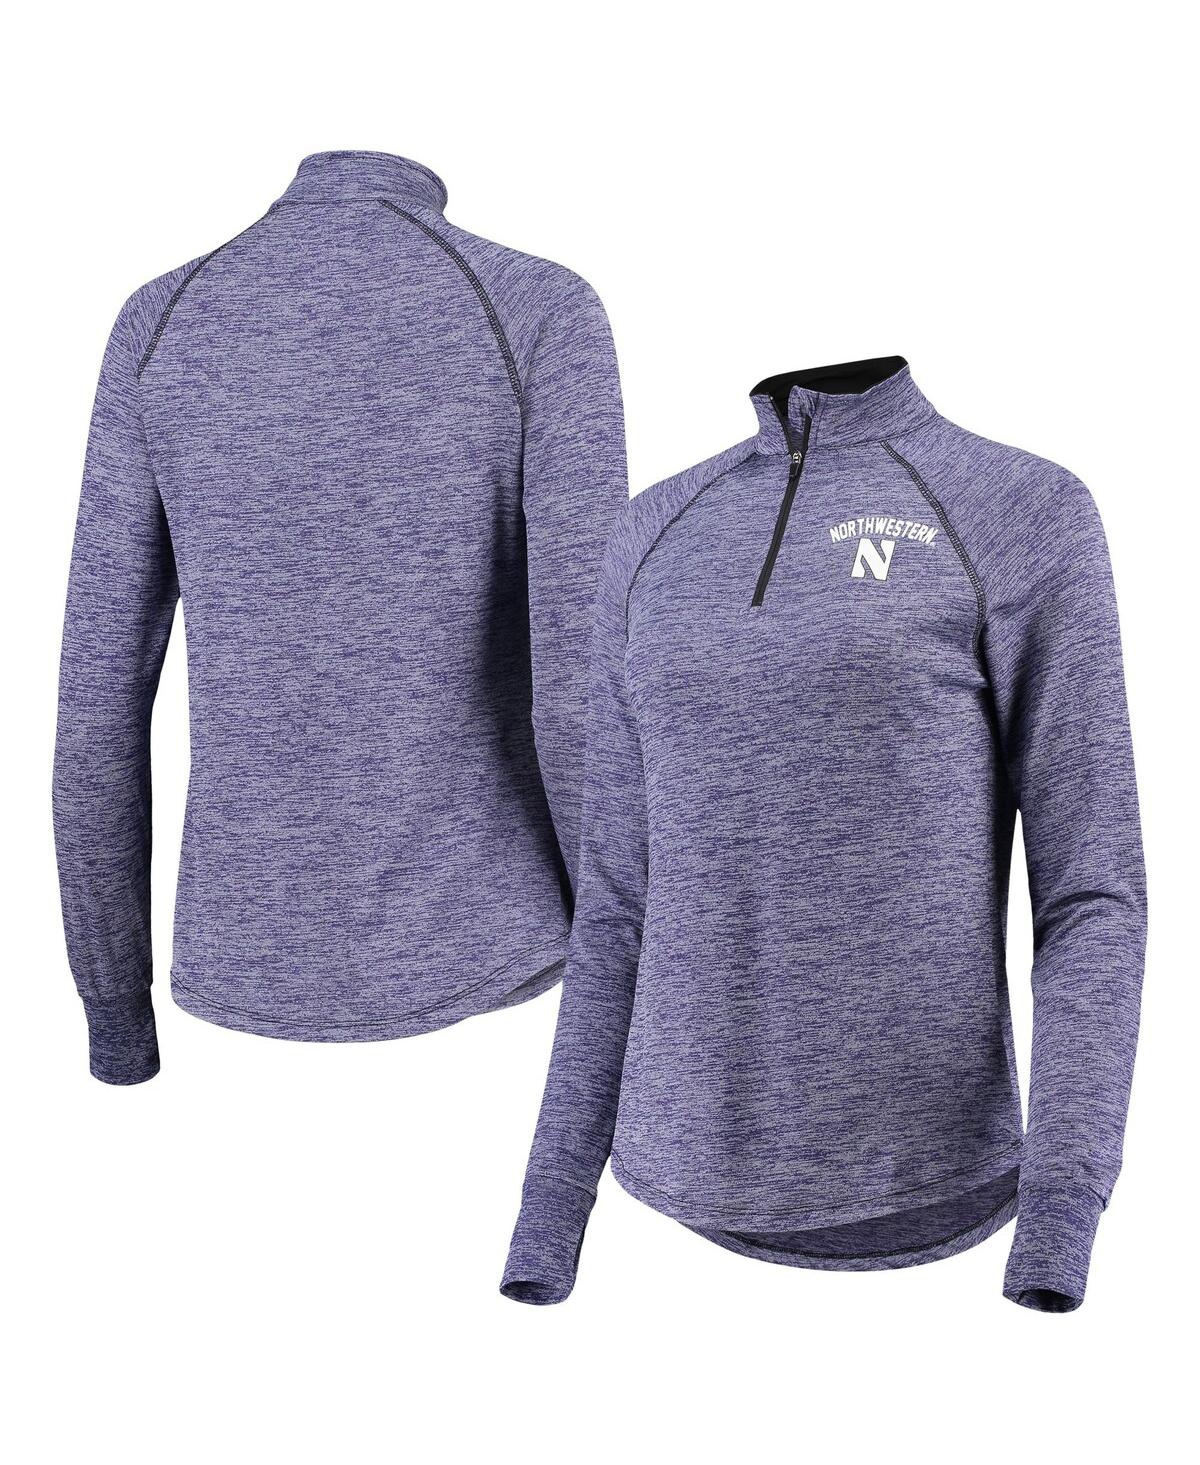 Women's Purple Northwestern Wildcats Bikram Quarter-Zip Pullover Jacket - Purple